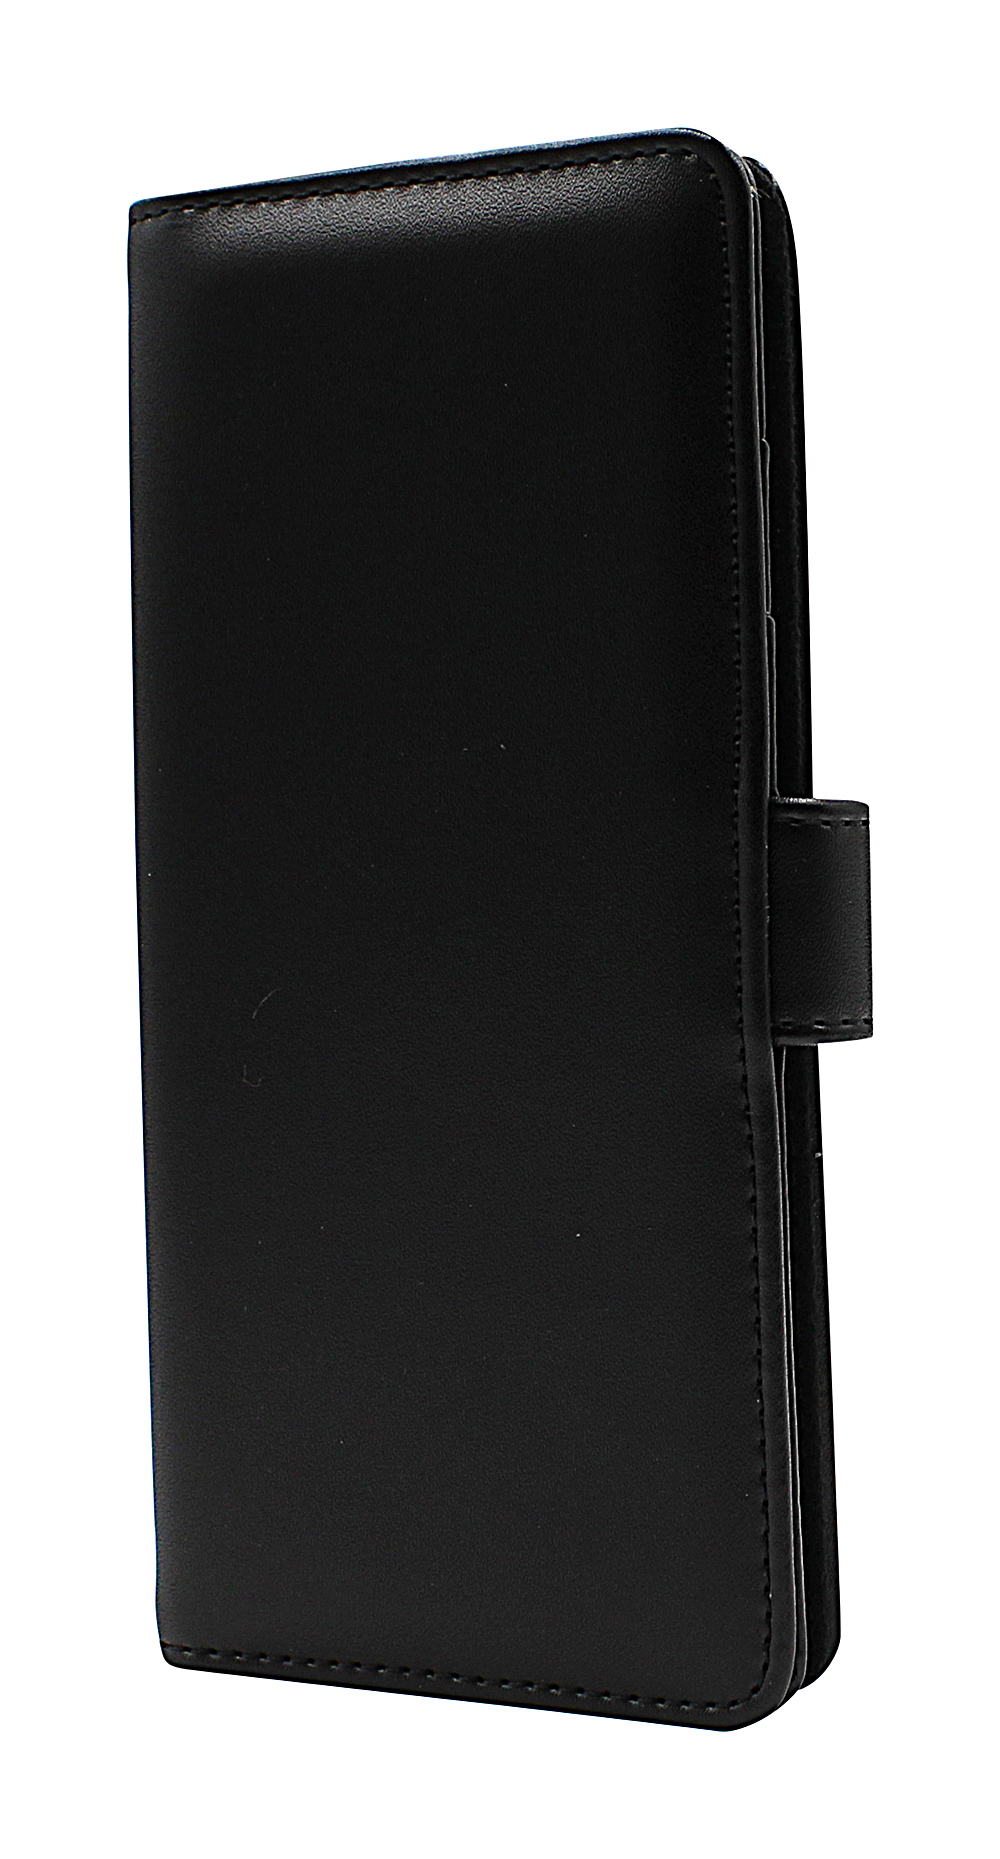 CoverInSkimblocker Plnboksfodral OnePlus 9 Pro